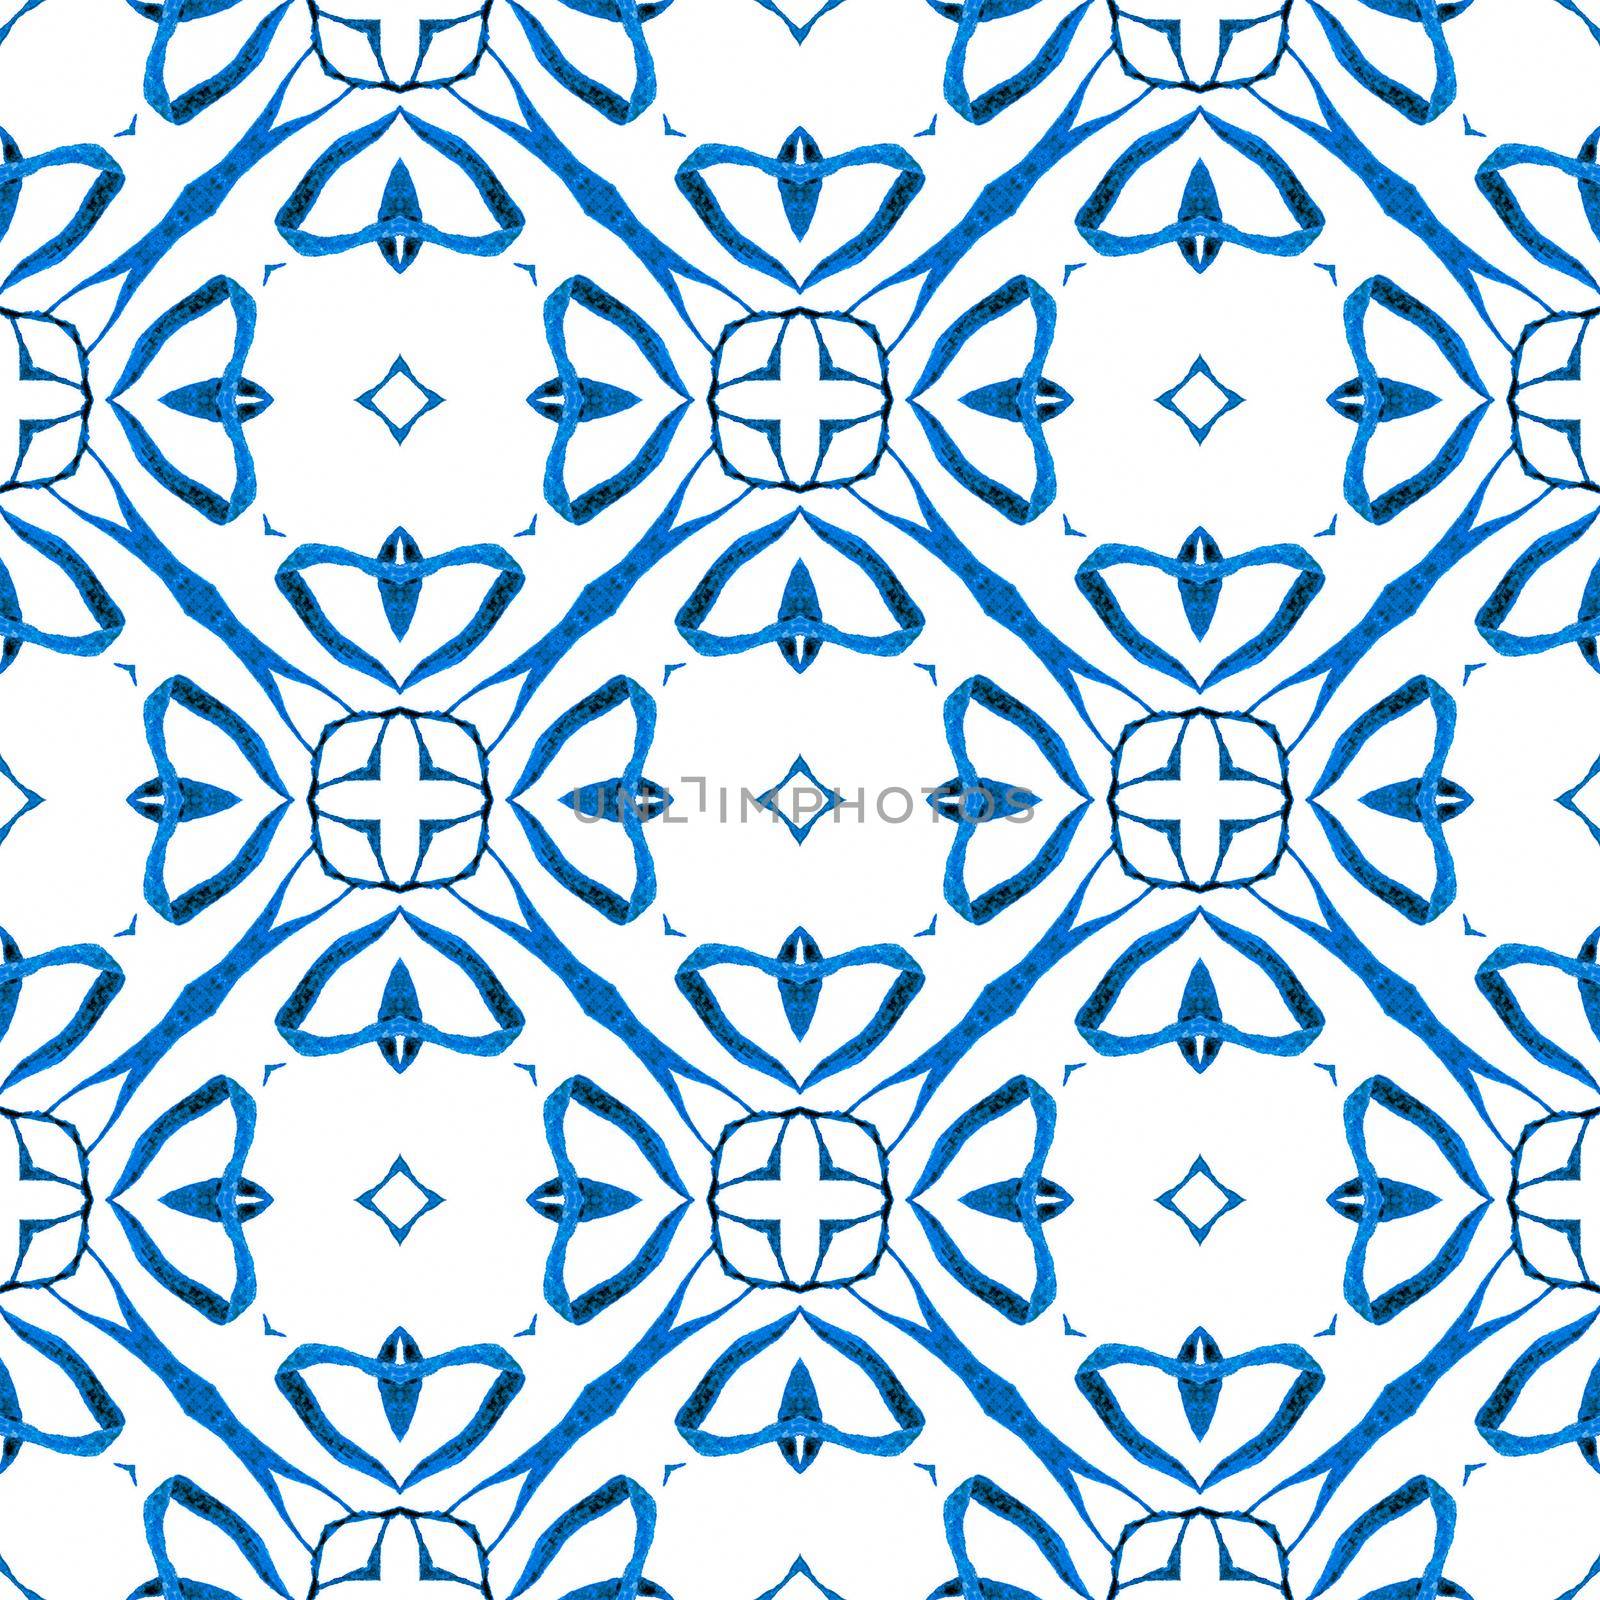 Chevron watercolor pattern. Blue Actual boho chic by beginagain